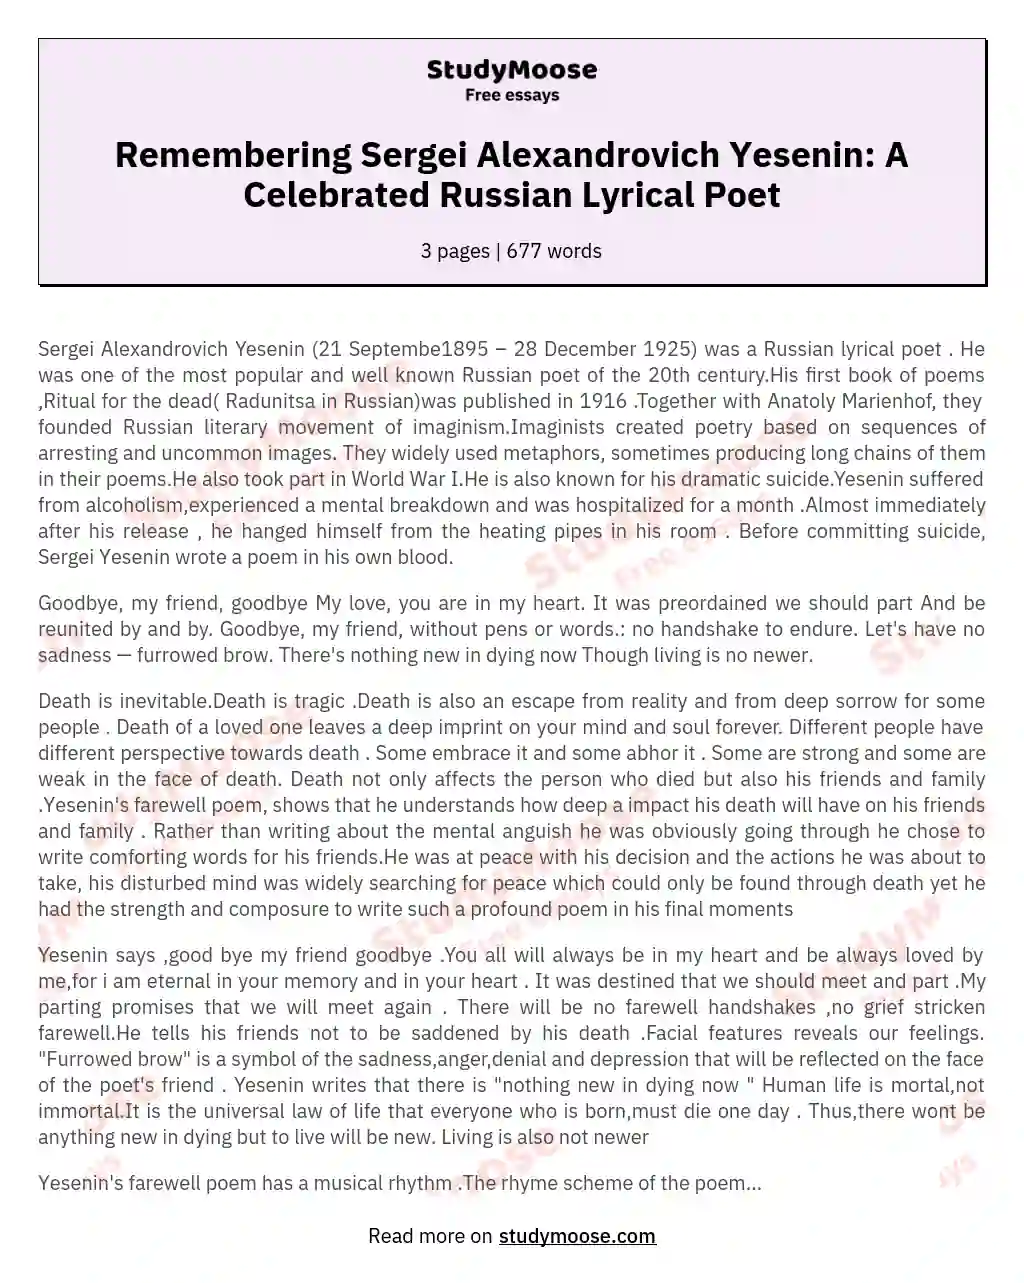 Remembering Sergei Alexandrovich Yesenin: A Celebrated Russian Lyrical Poet essay